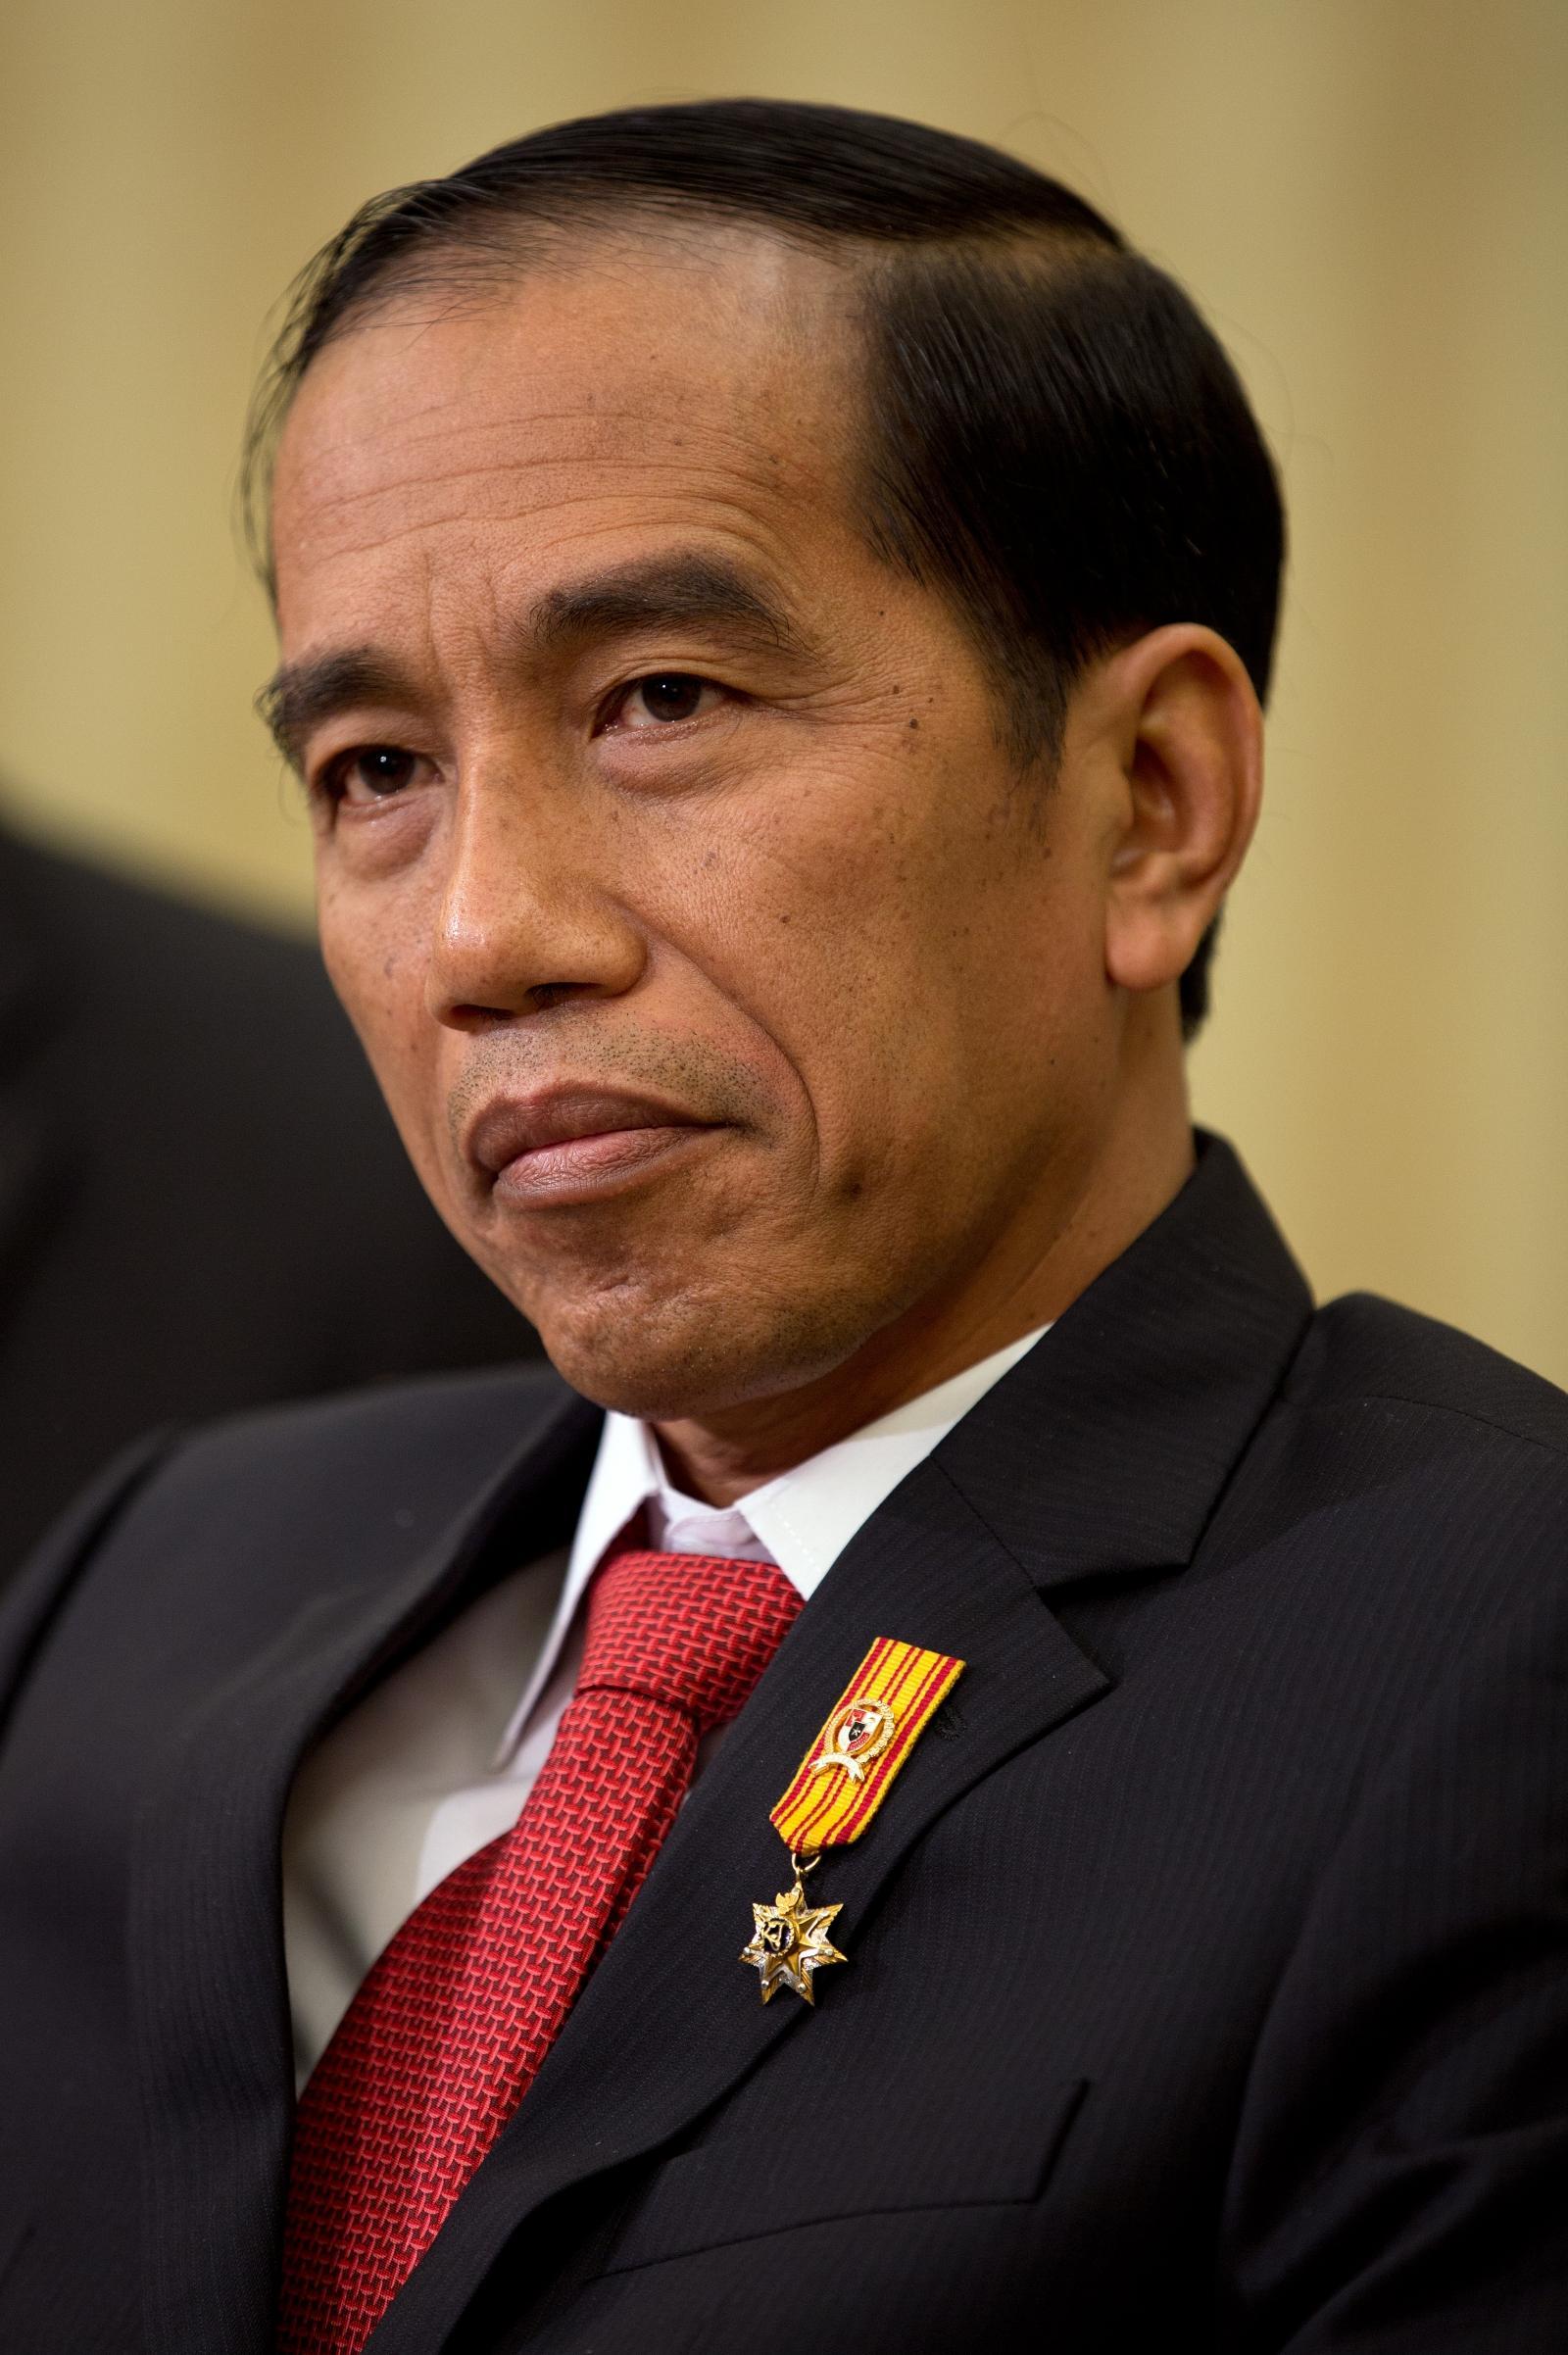 Indonesia: President Joko Widodo determined to prevent